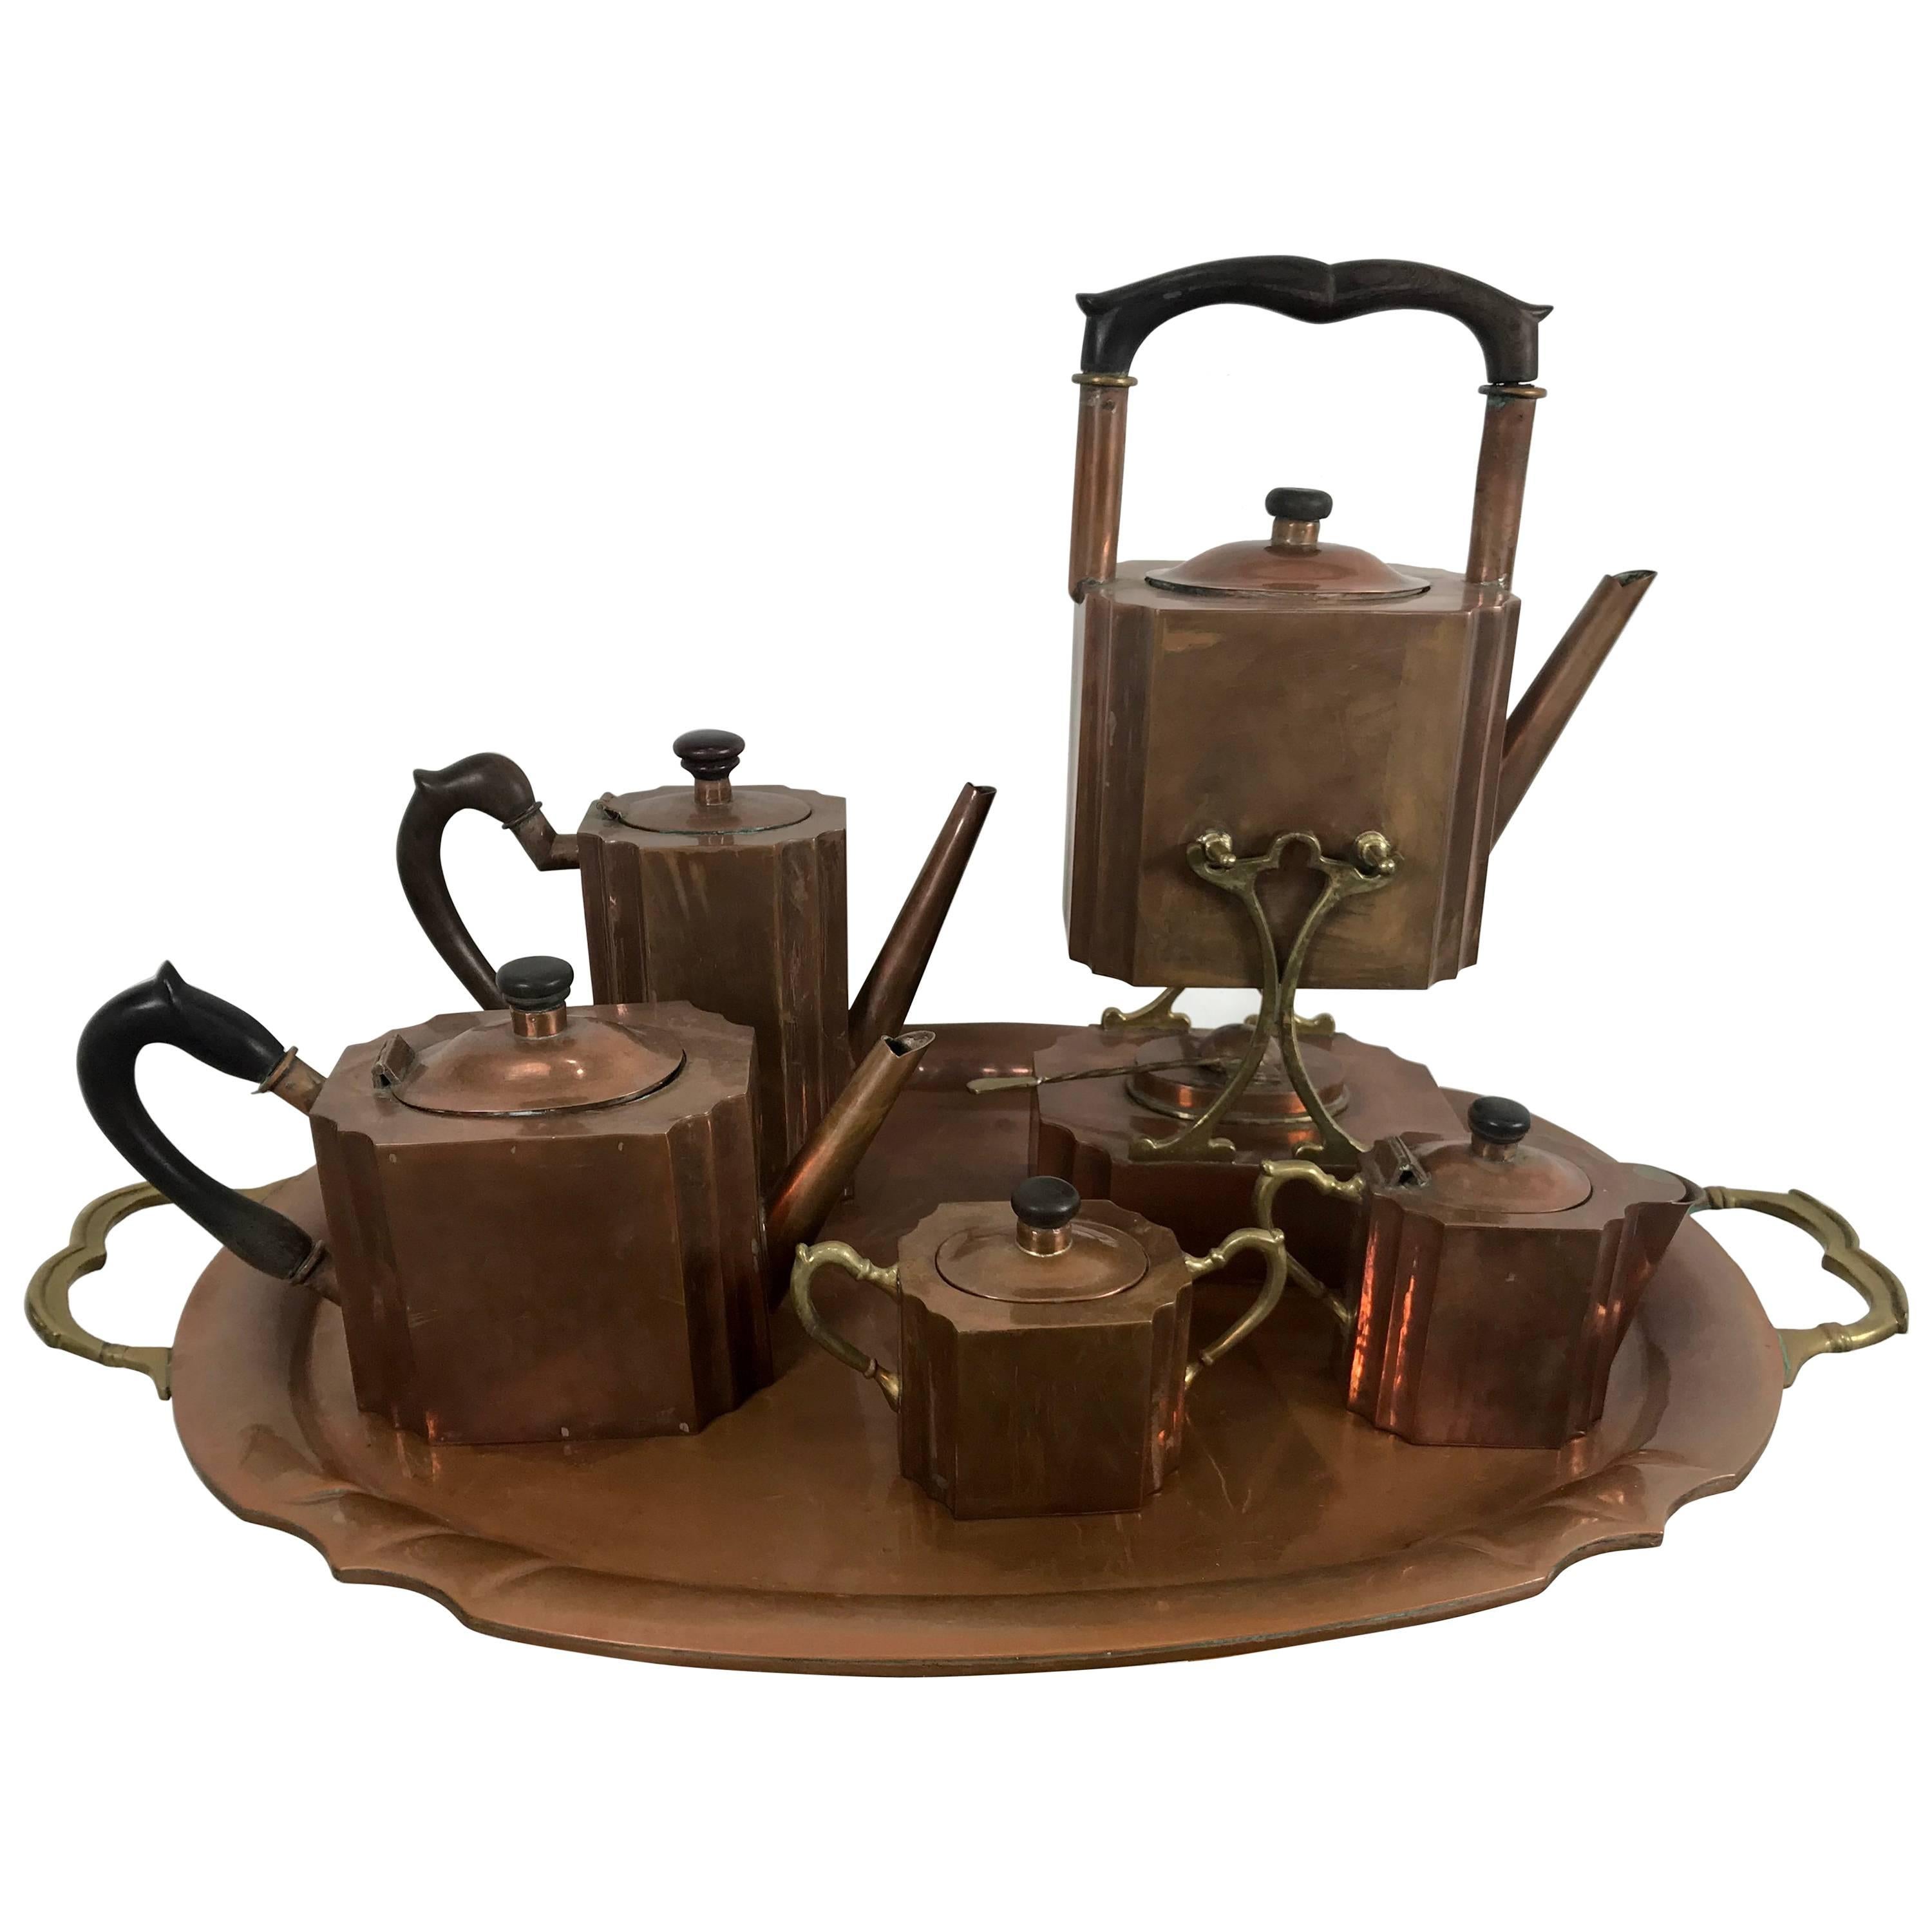 Stylized Six-Piece Art Deco Copper Tea and Coffee Set Creamer, Sugar Tray